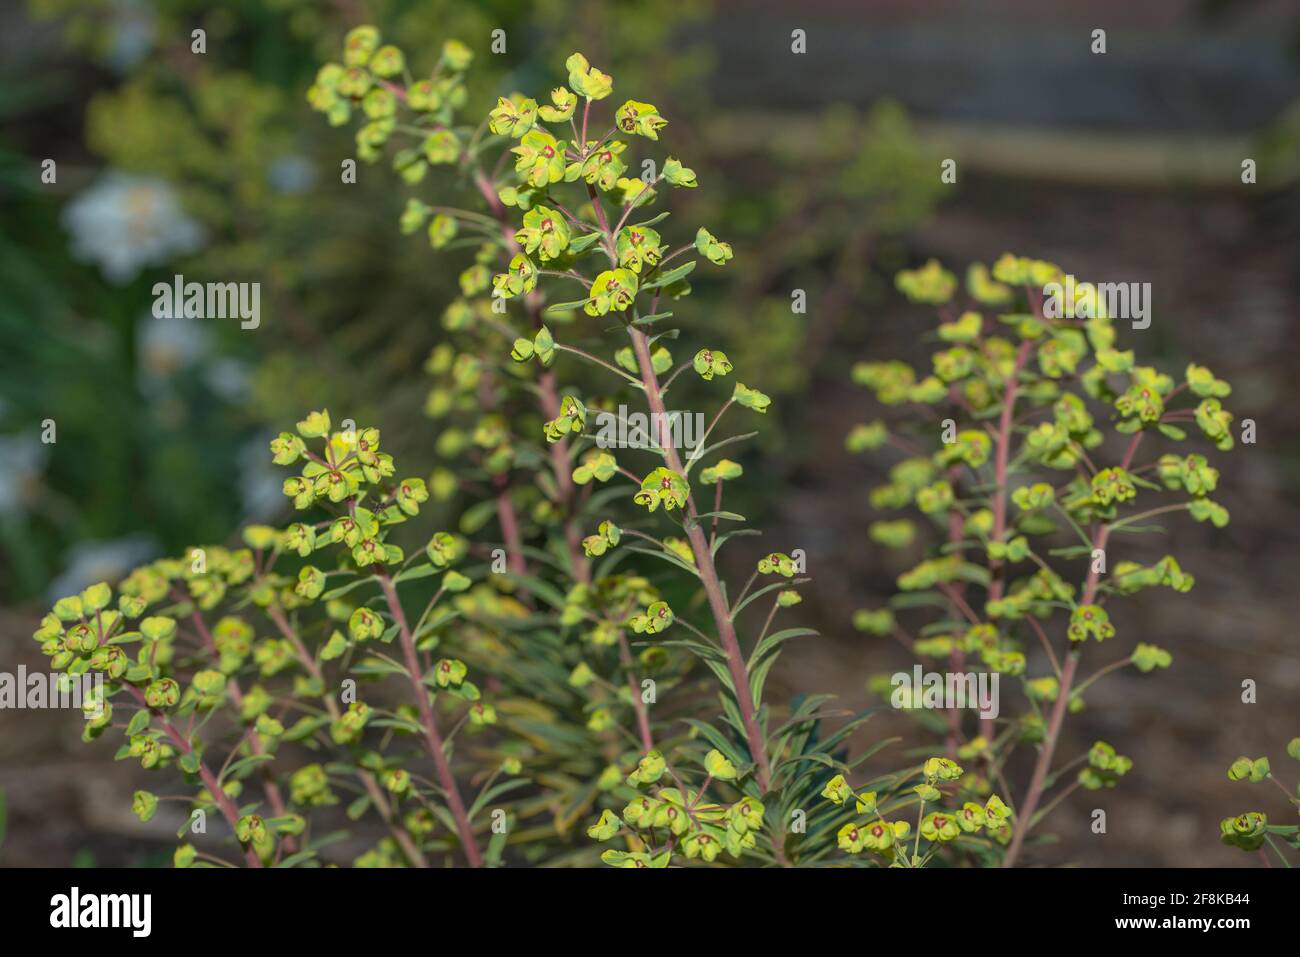 Martin's Spurge (Euphorbia x martinii 'Ascot Rainbow') flowering in a nature garden Stock Photo